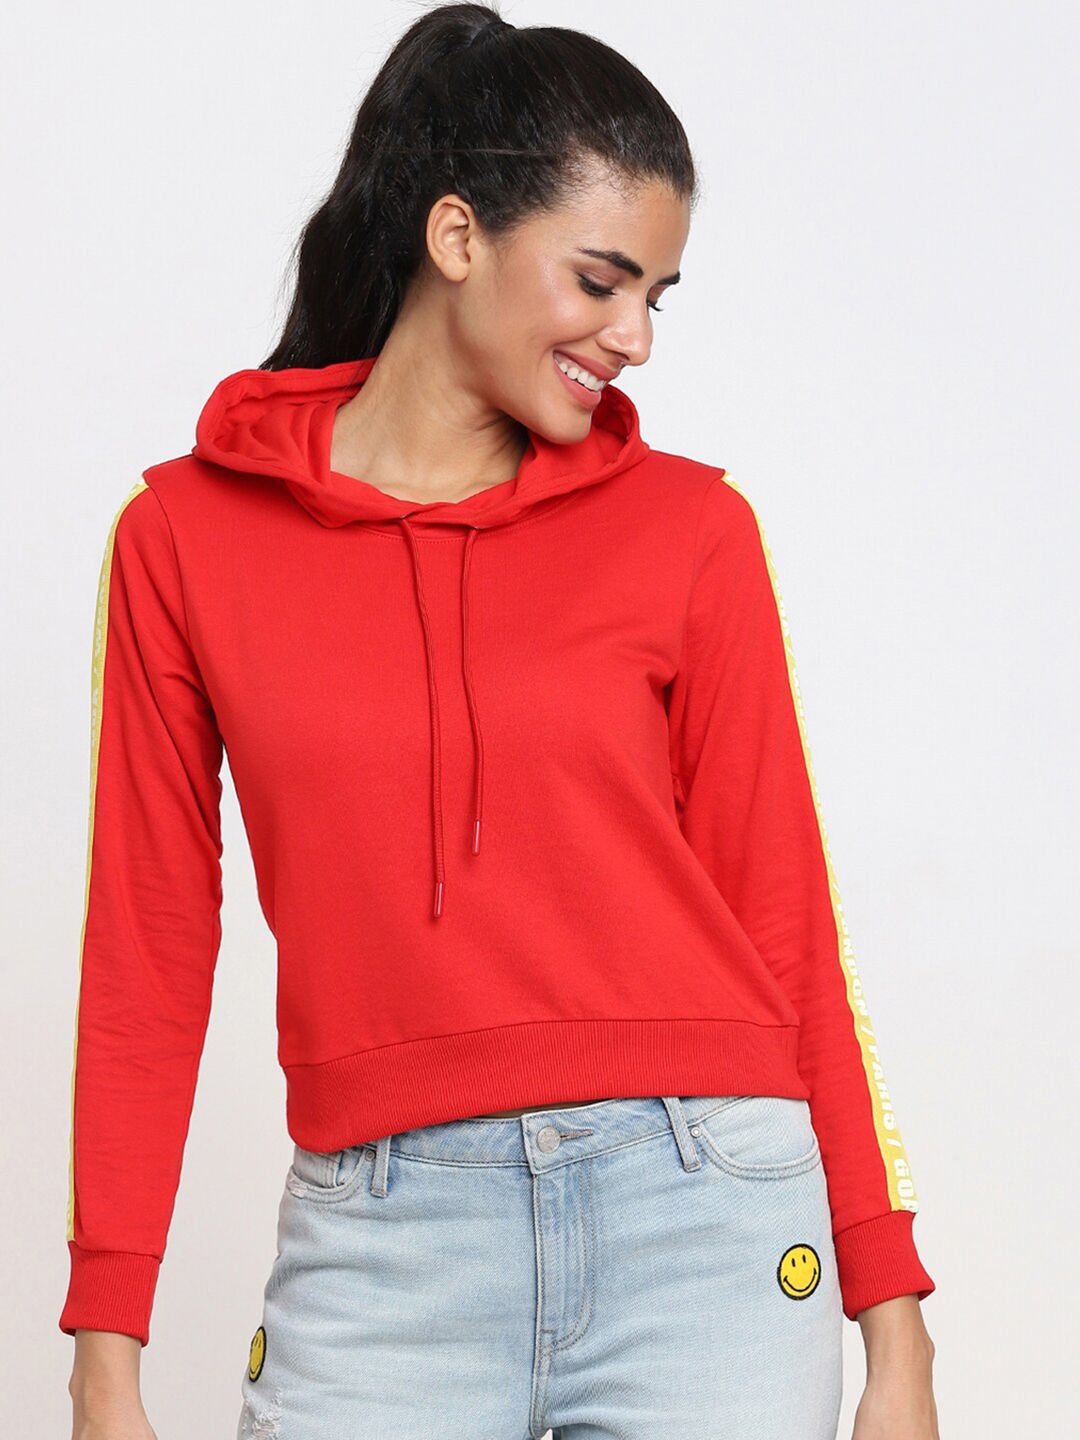 Bewakoof Women Red Hooded Cotton Sweatshirt Price in India